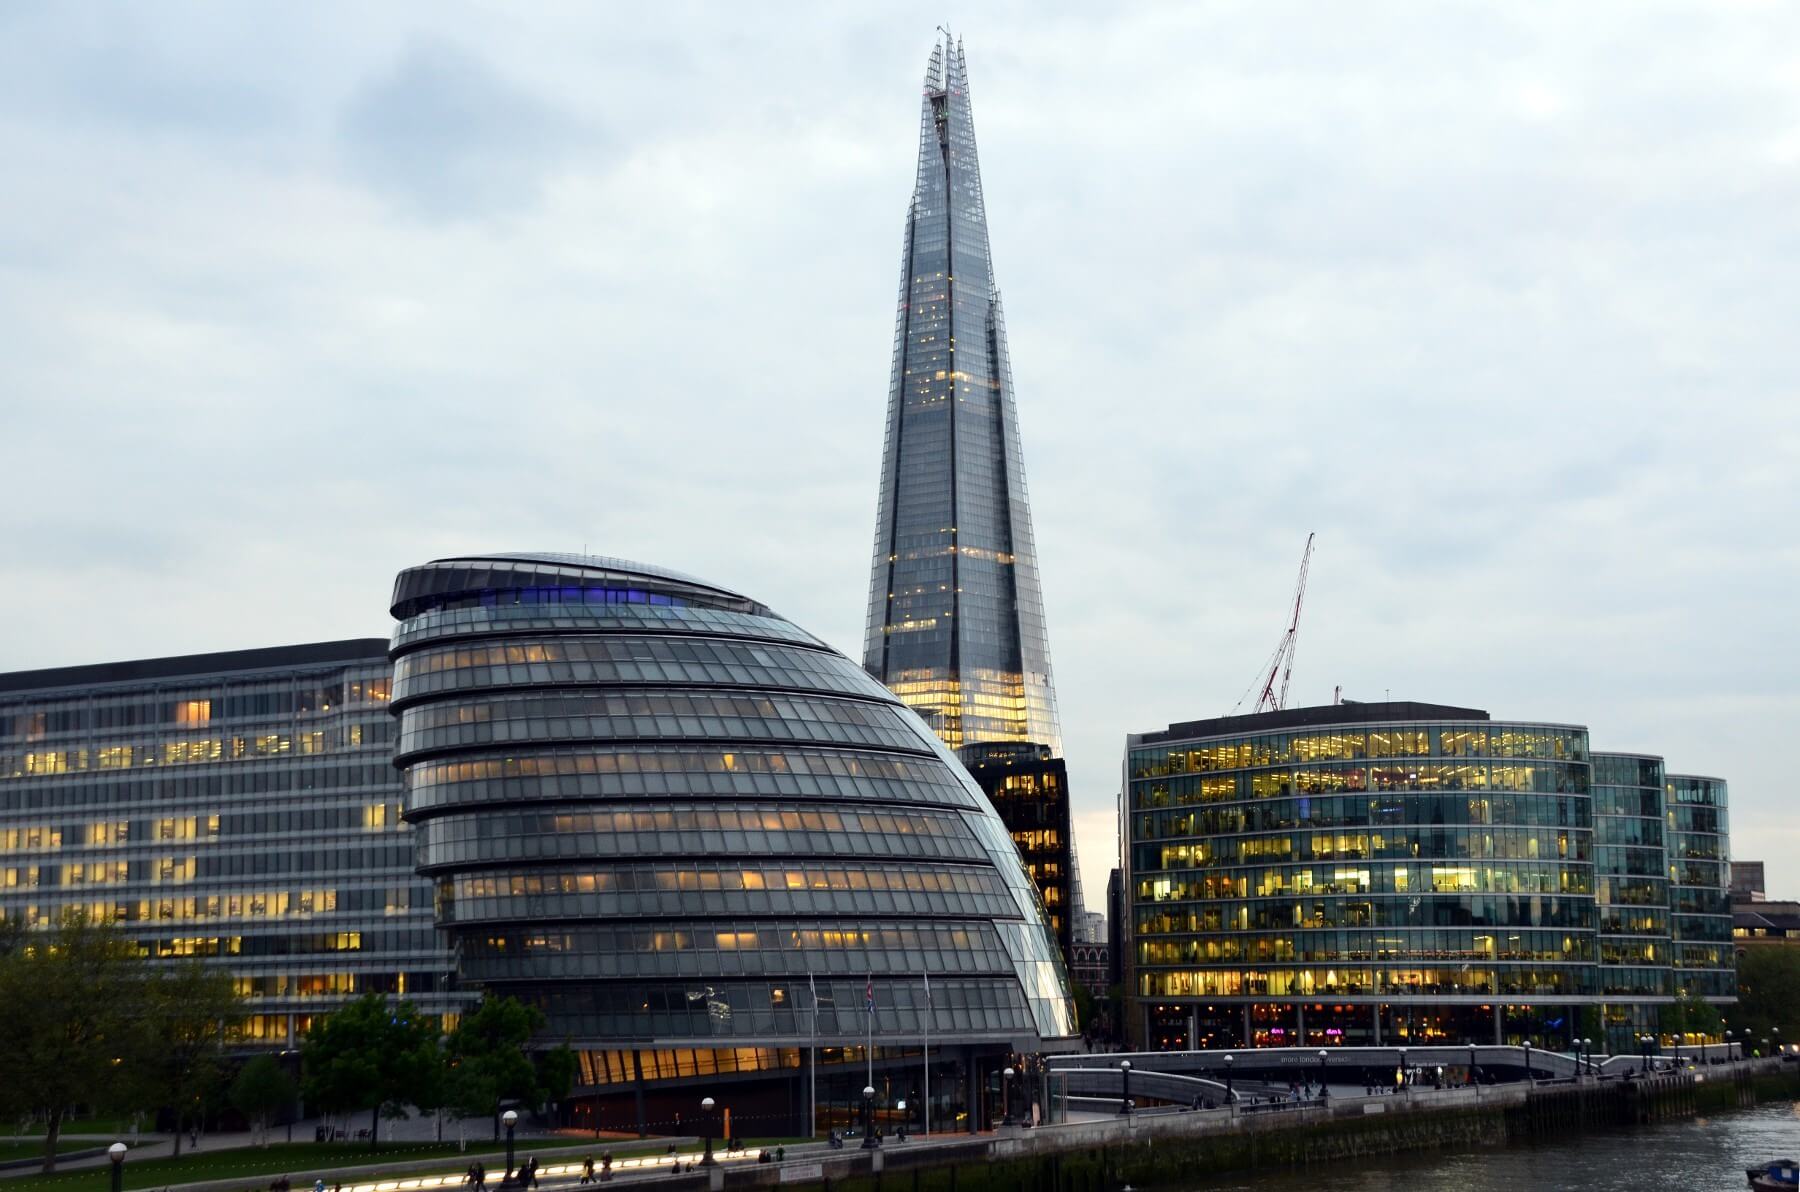 Tallest Building In London